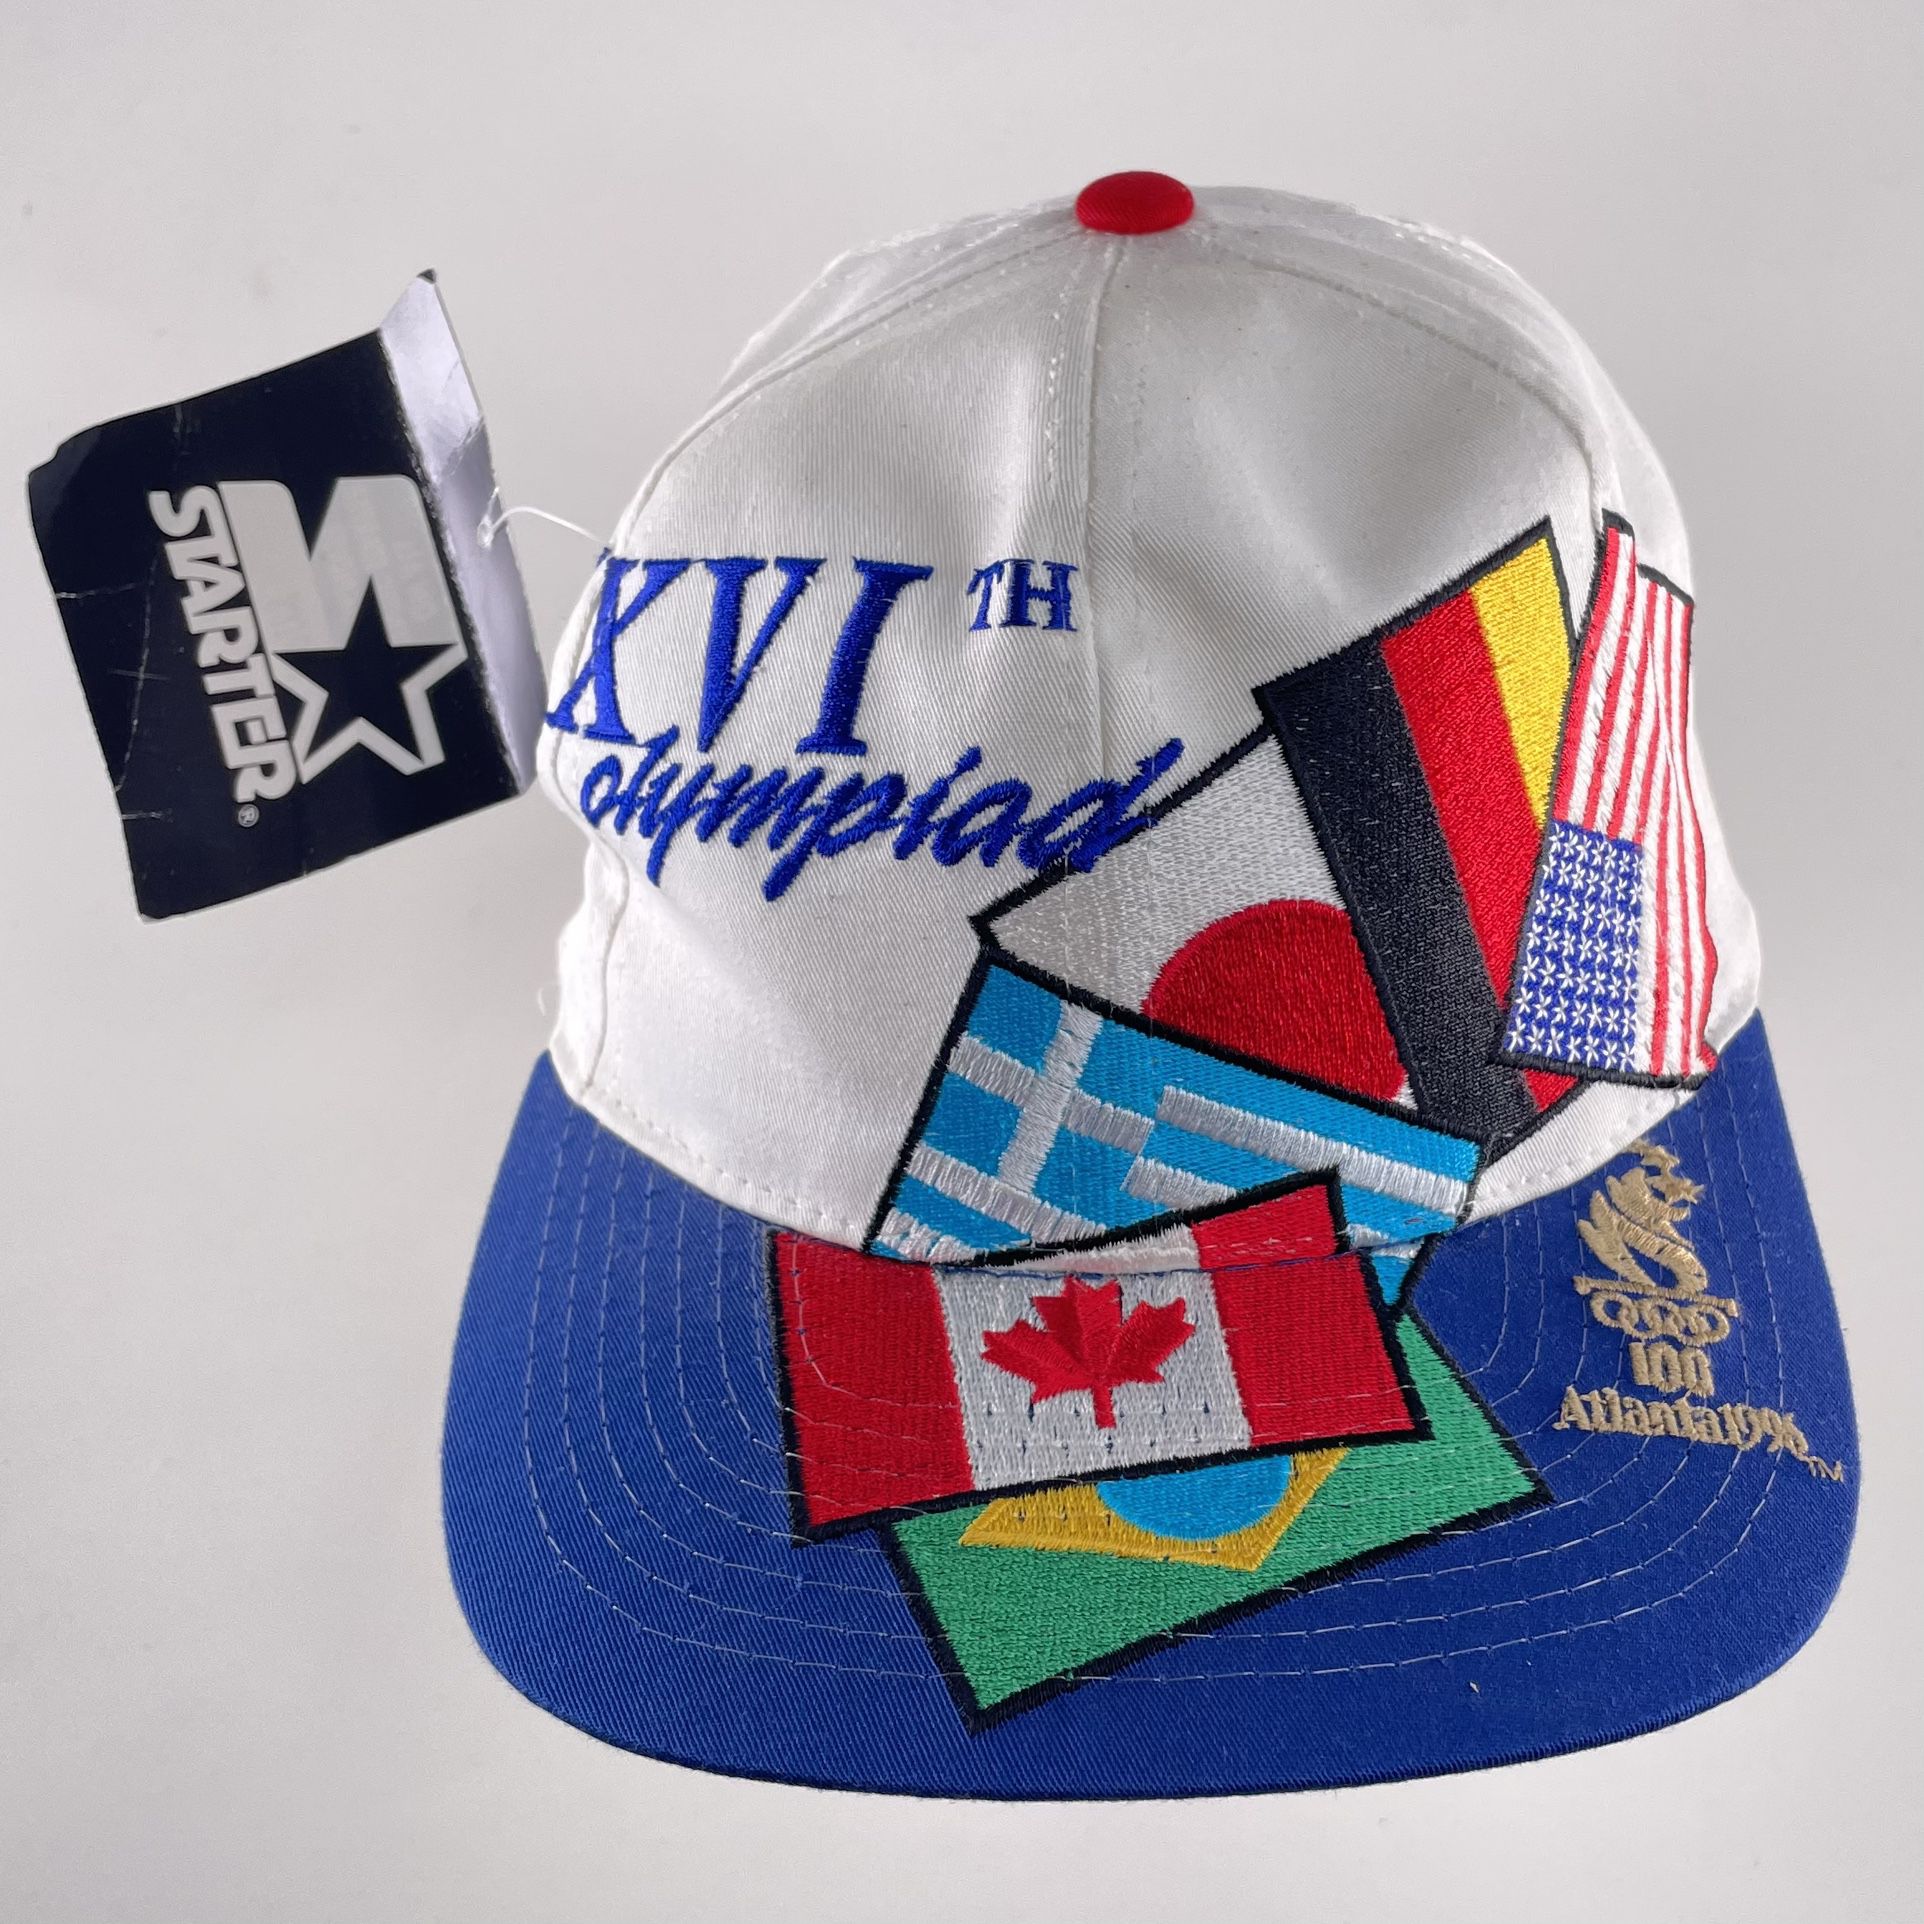 Vintage 1996 Olympics Hat